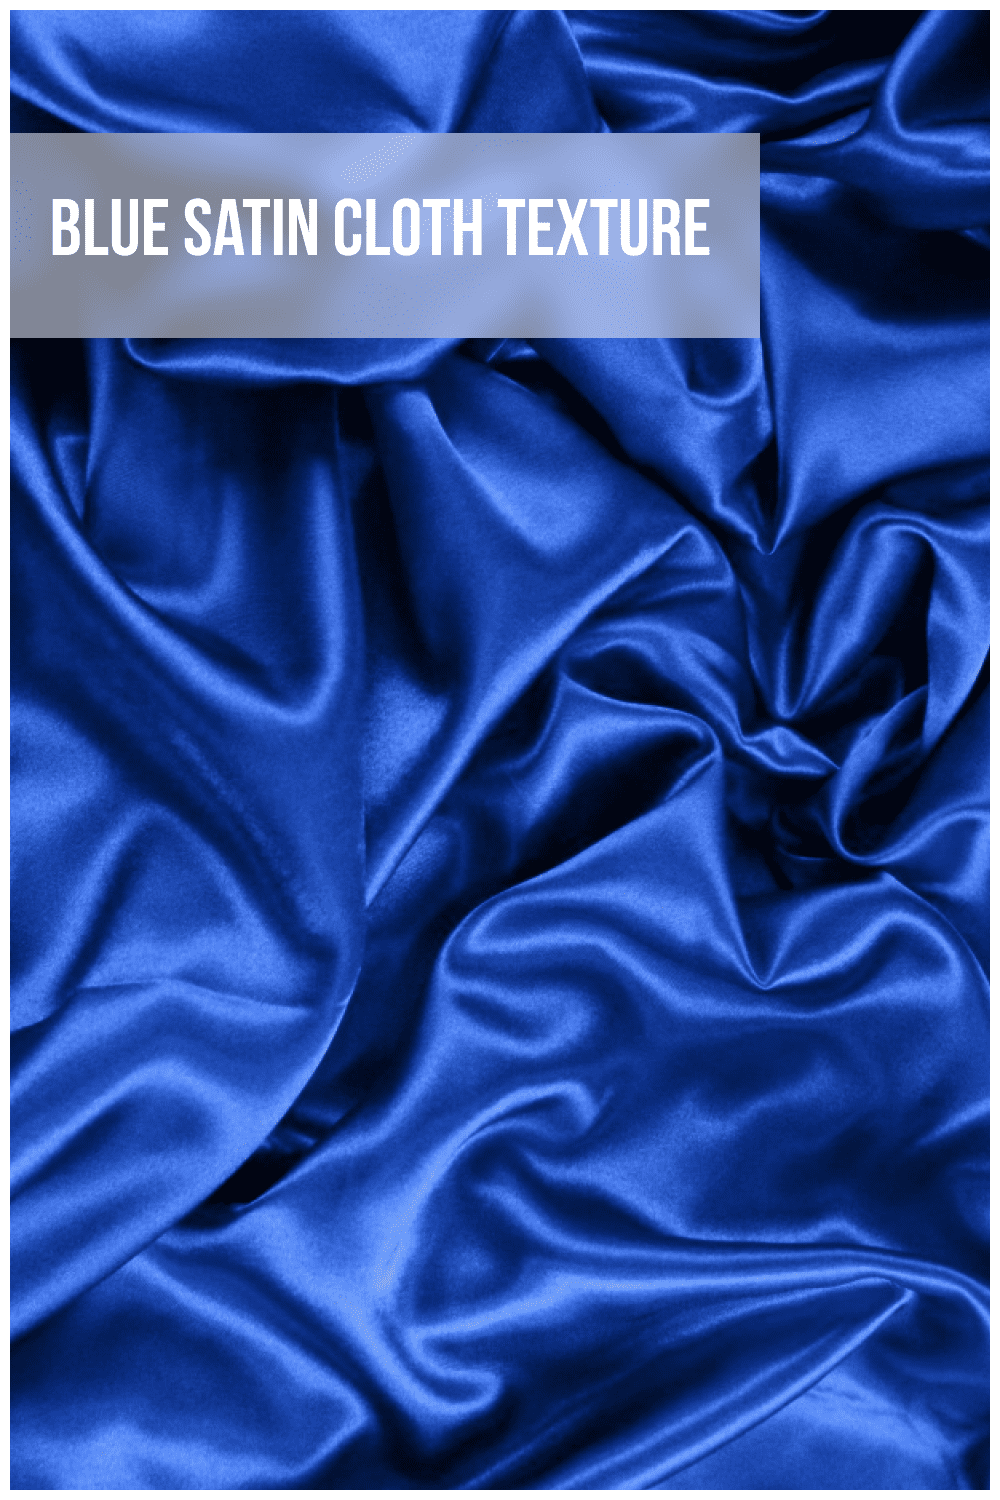 Blue Satin Cloth Texture.